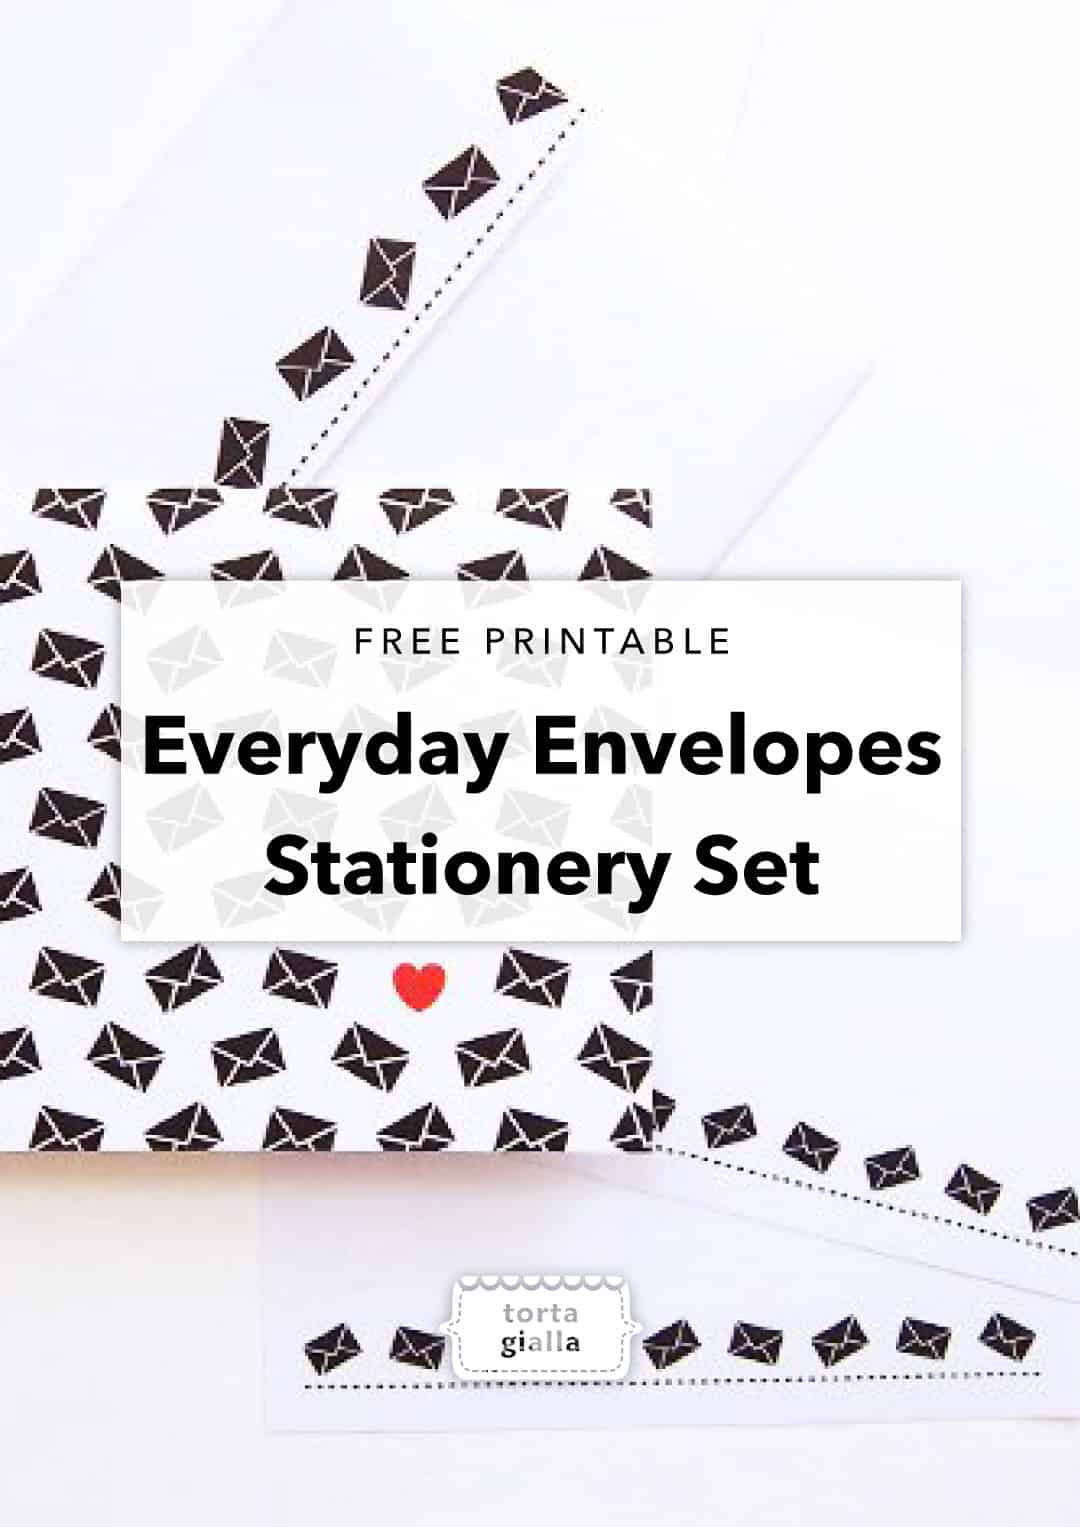 Free Printable Envelopes Stationery Set For Letter Writers - Free Printable Stationery Envelopes